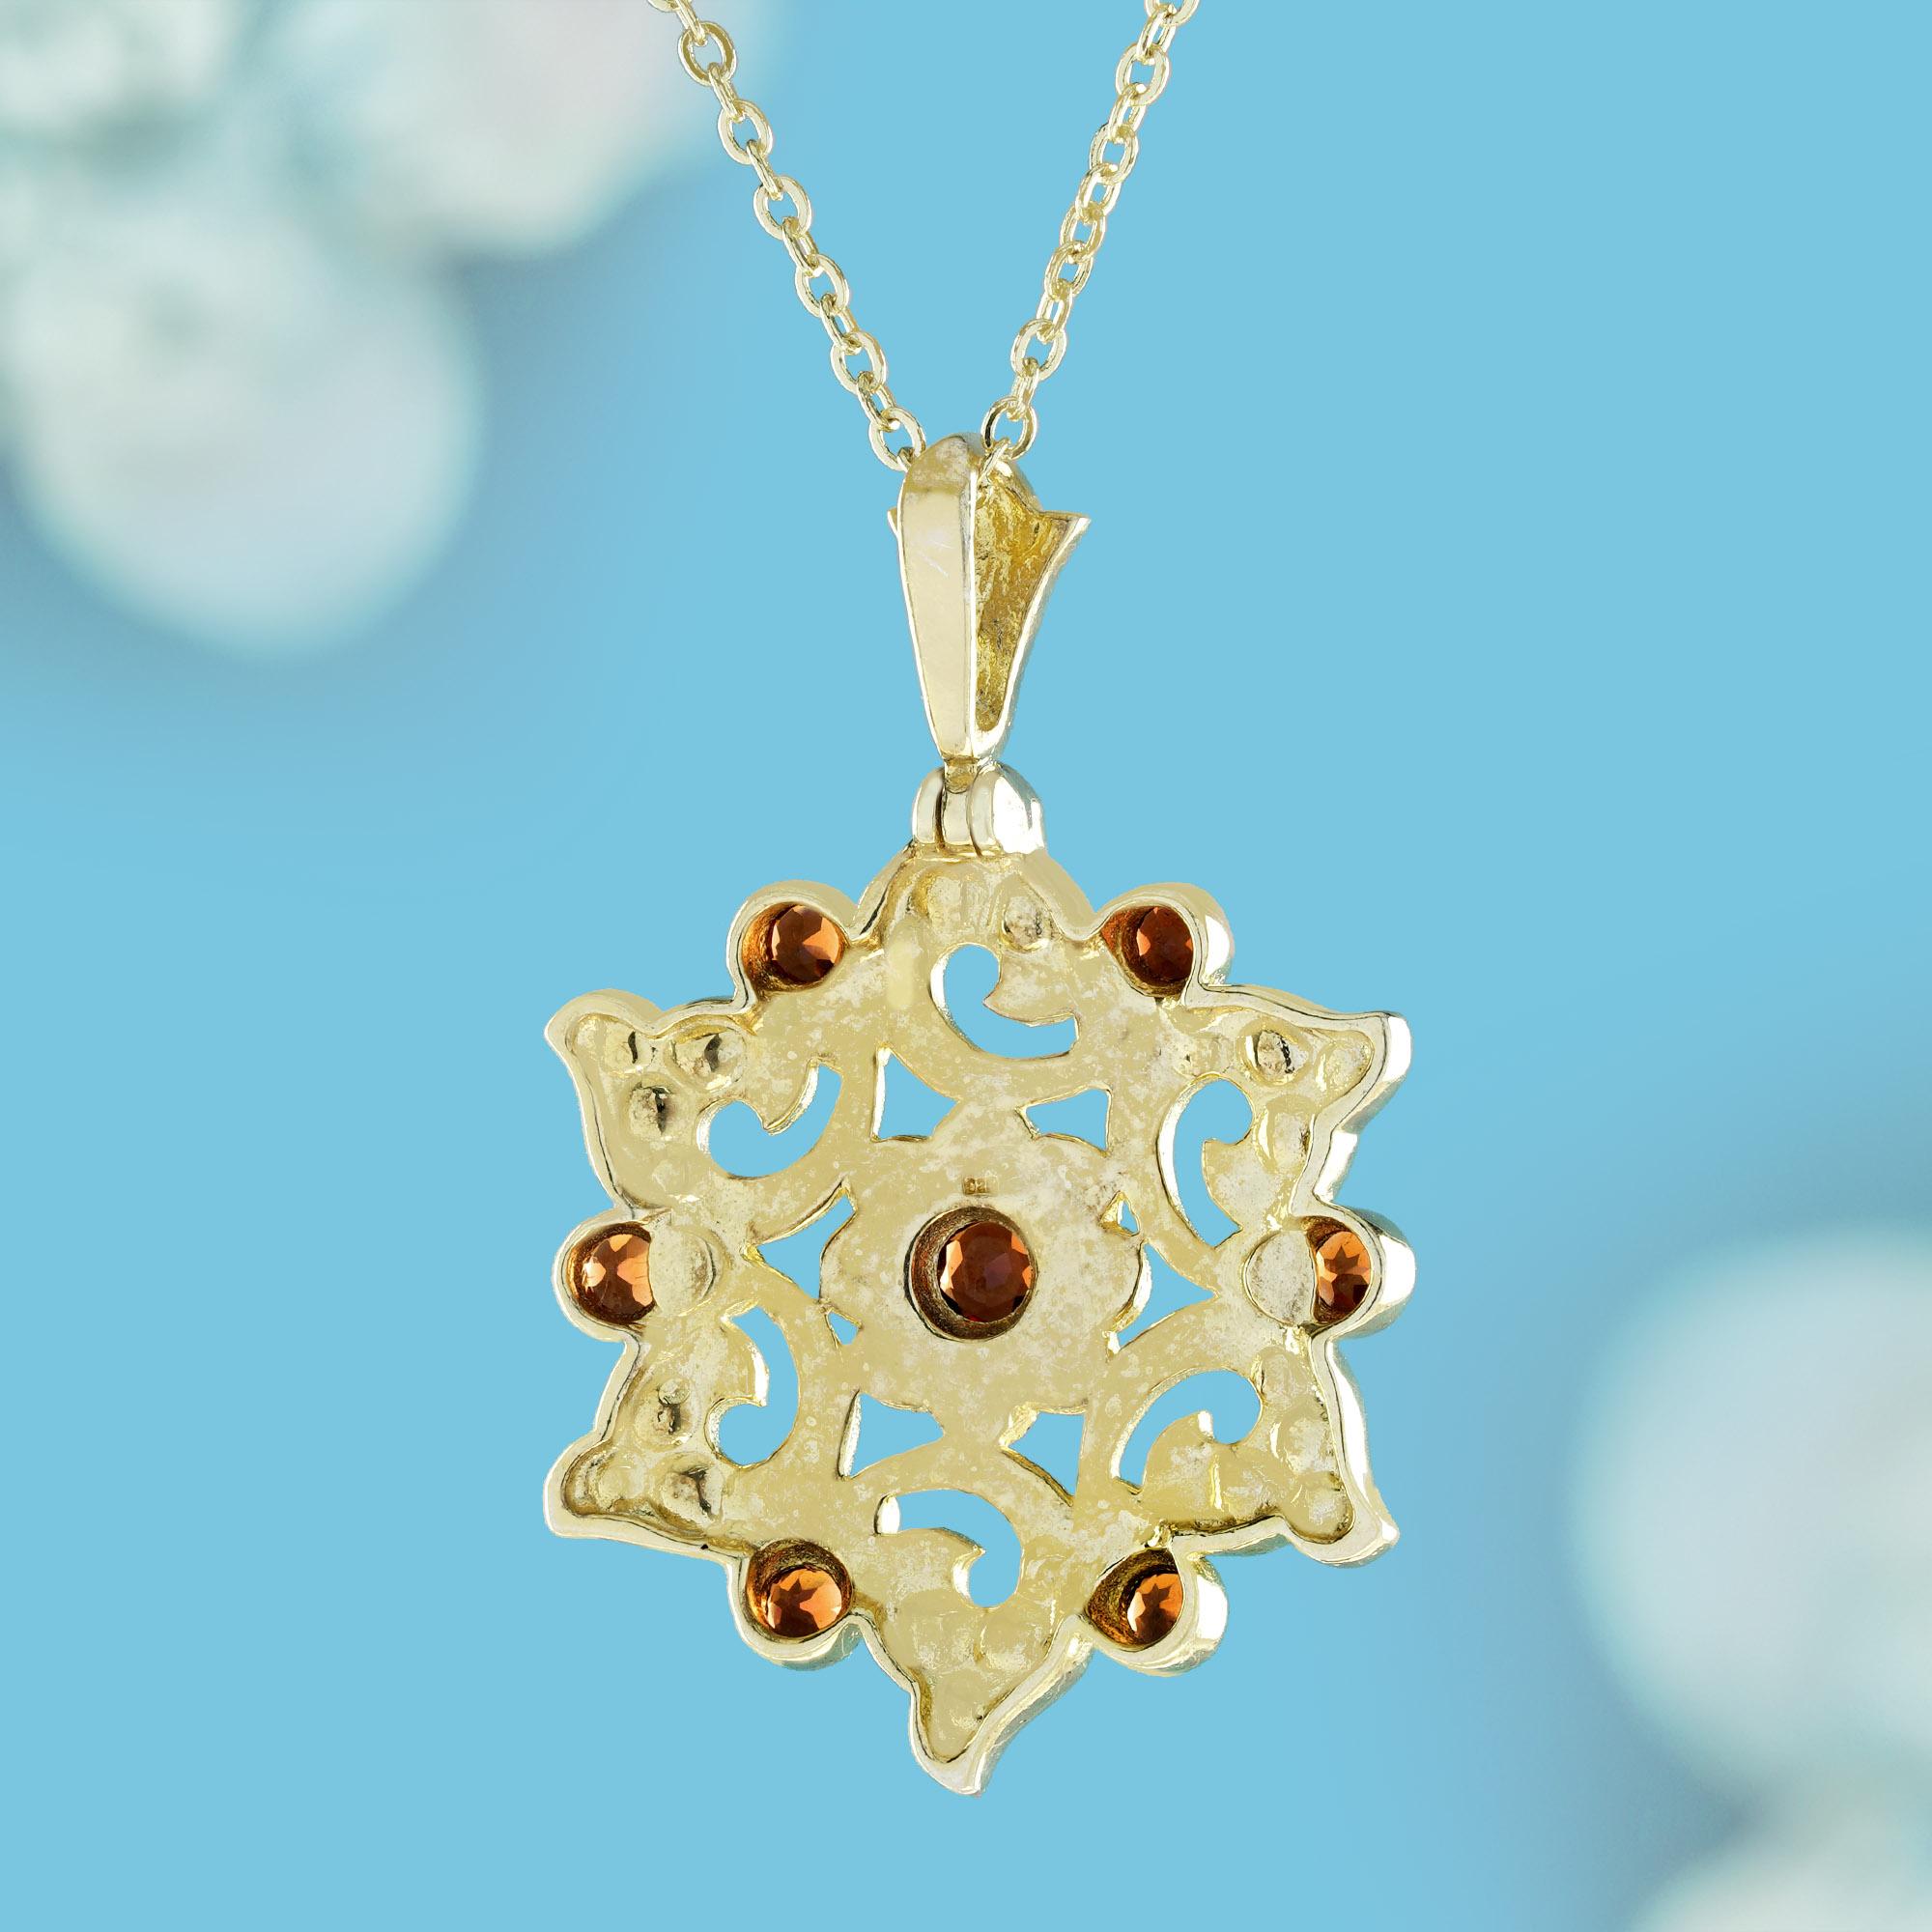 Taille ronde Pendentif grappe floral de style vintage en or massif 9 carats, grenat naturel et perle en vente